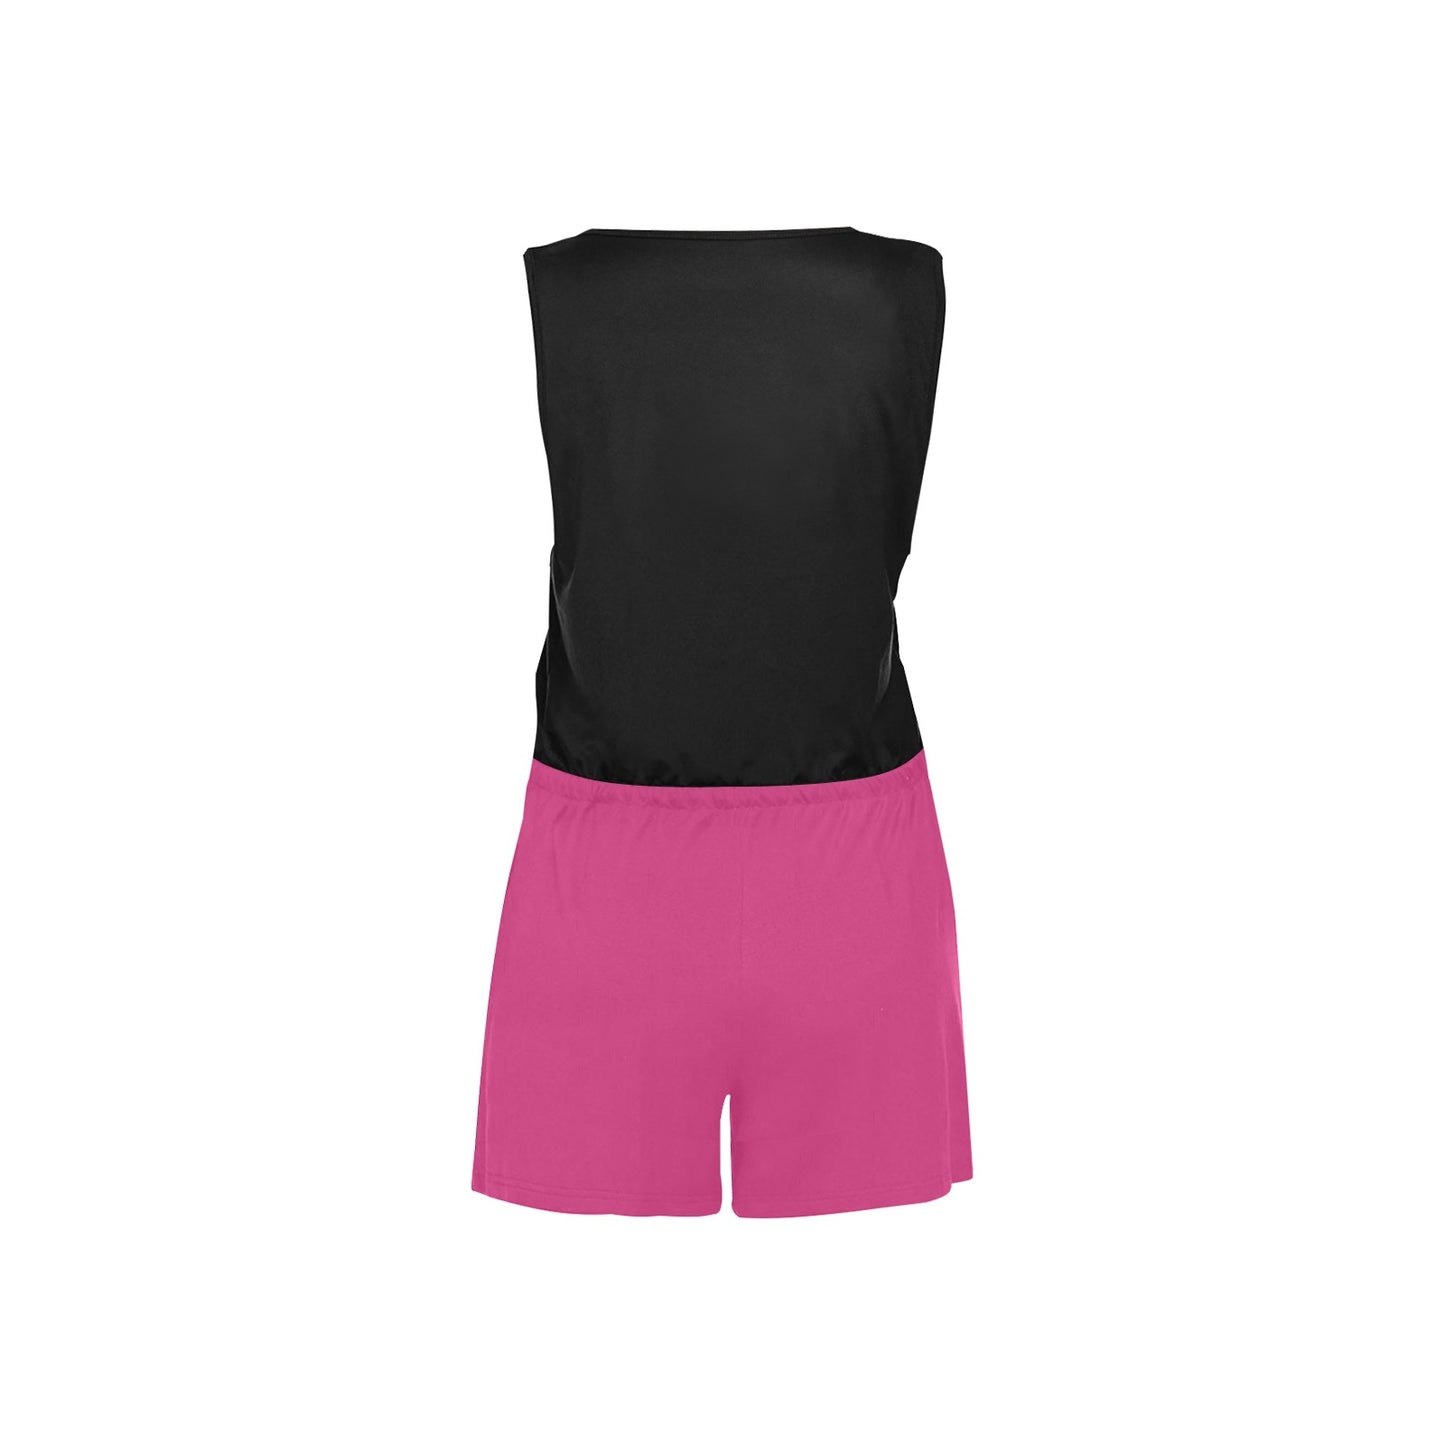 VG Cherry Lip Pink Short Jumpsuit